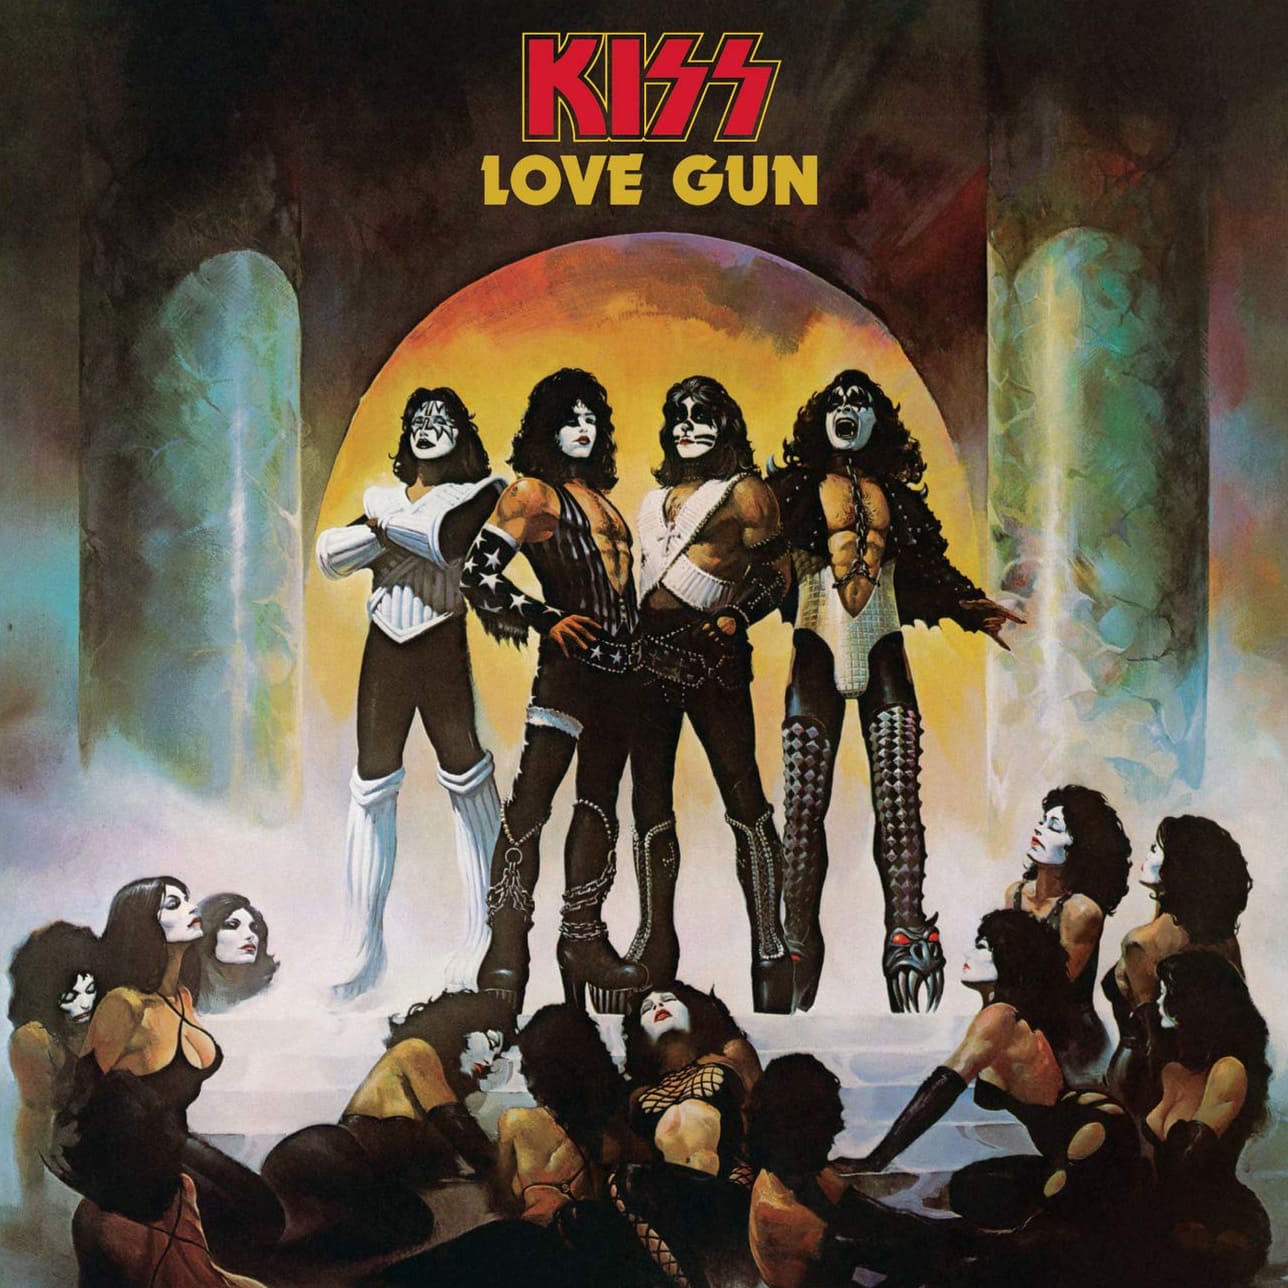 https://kisstimeline.com/wp-content/uploads/2023/02/kiss-love-gun-1977.jpg